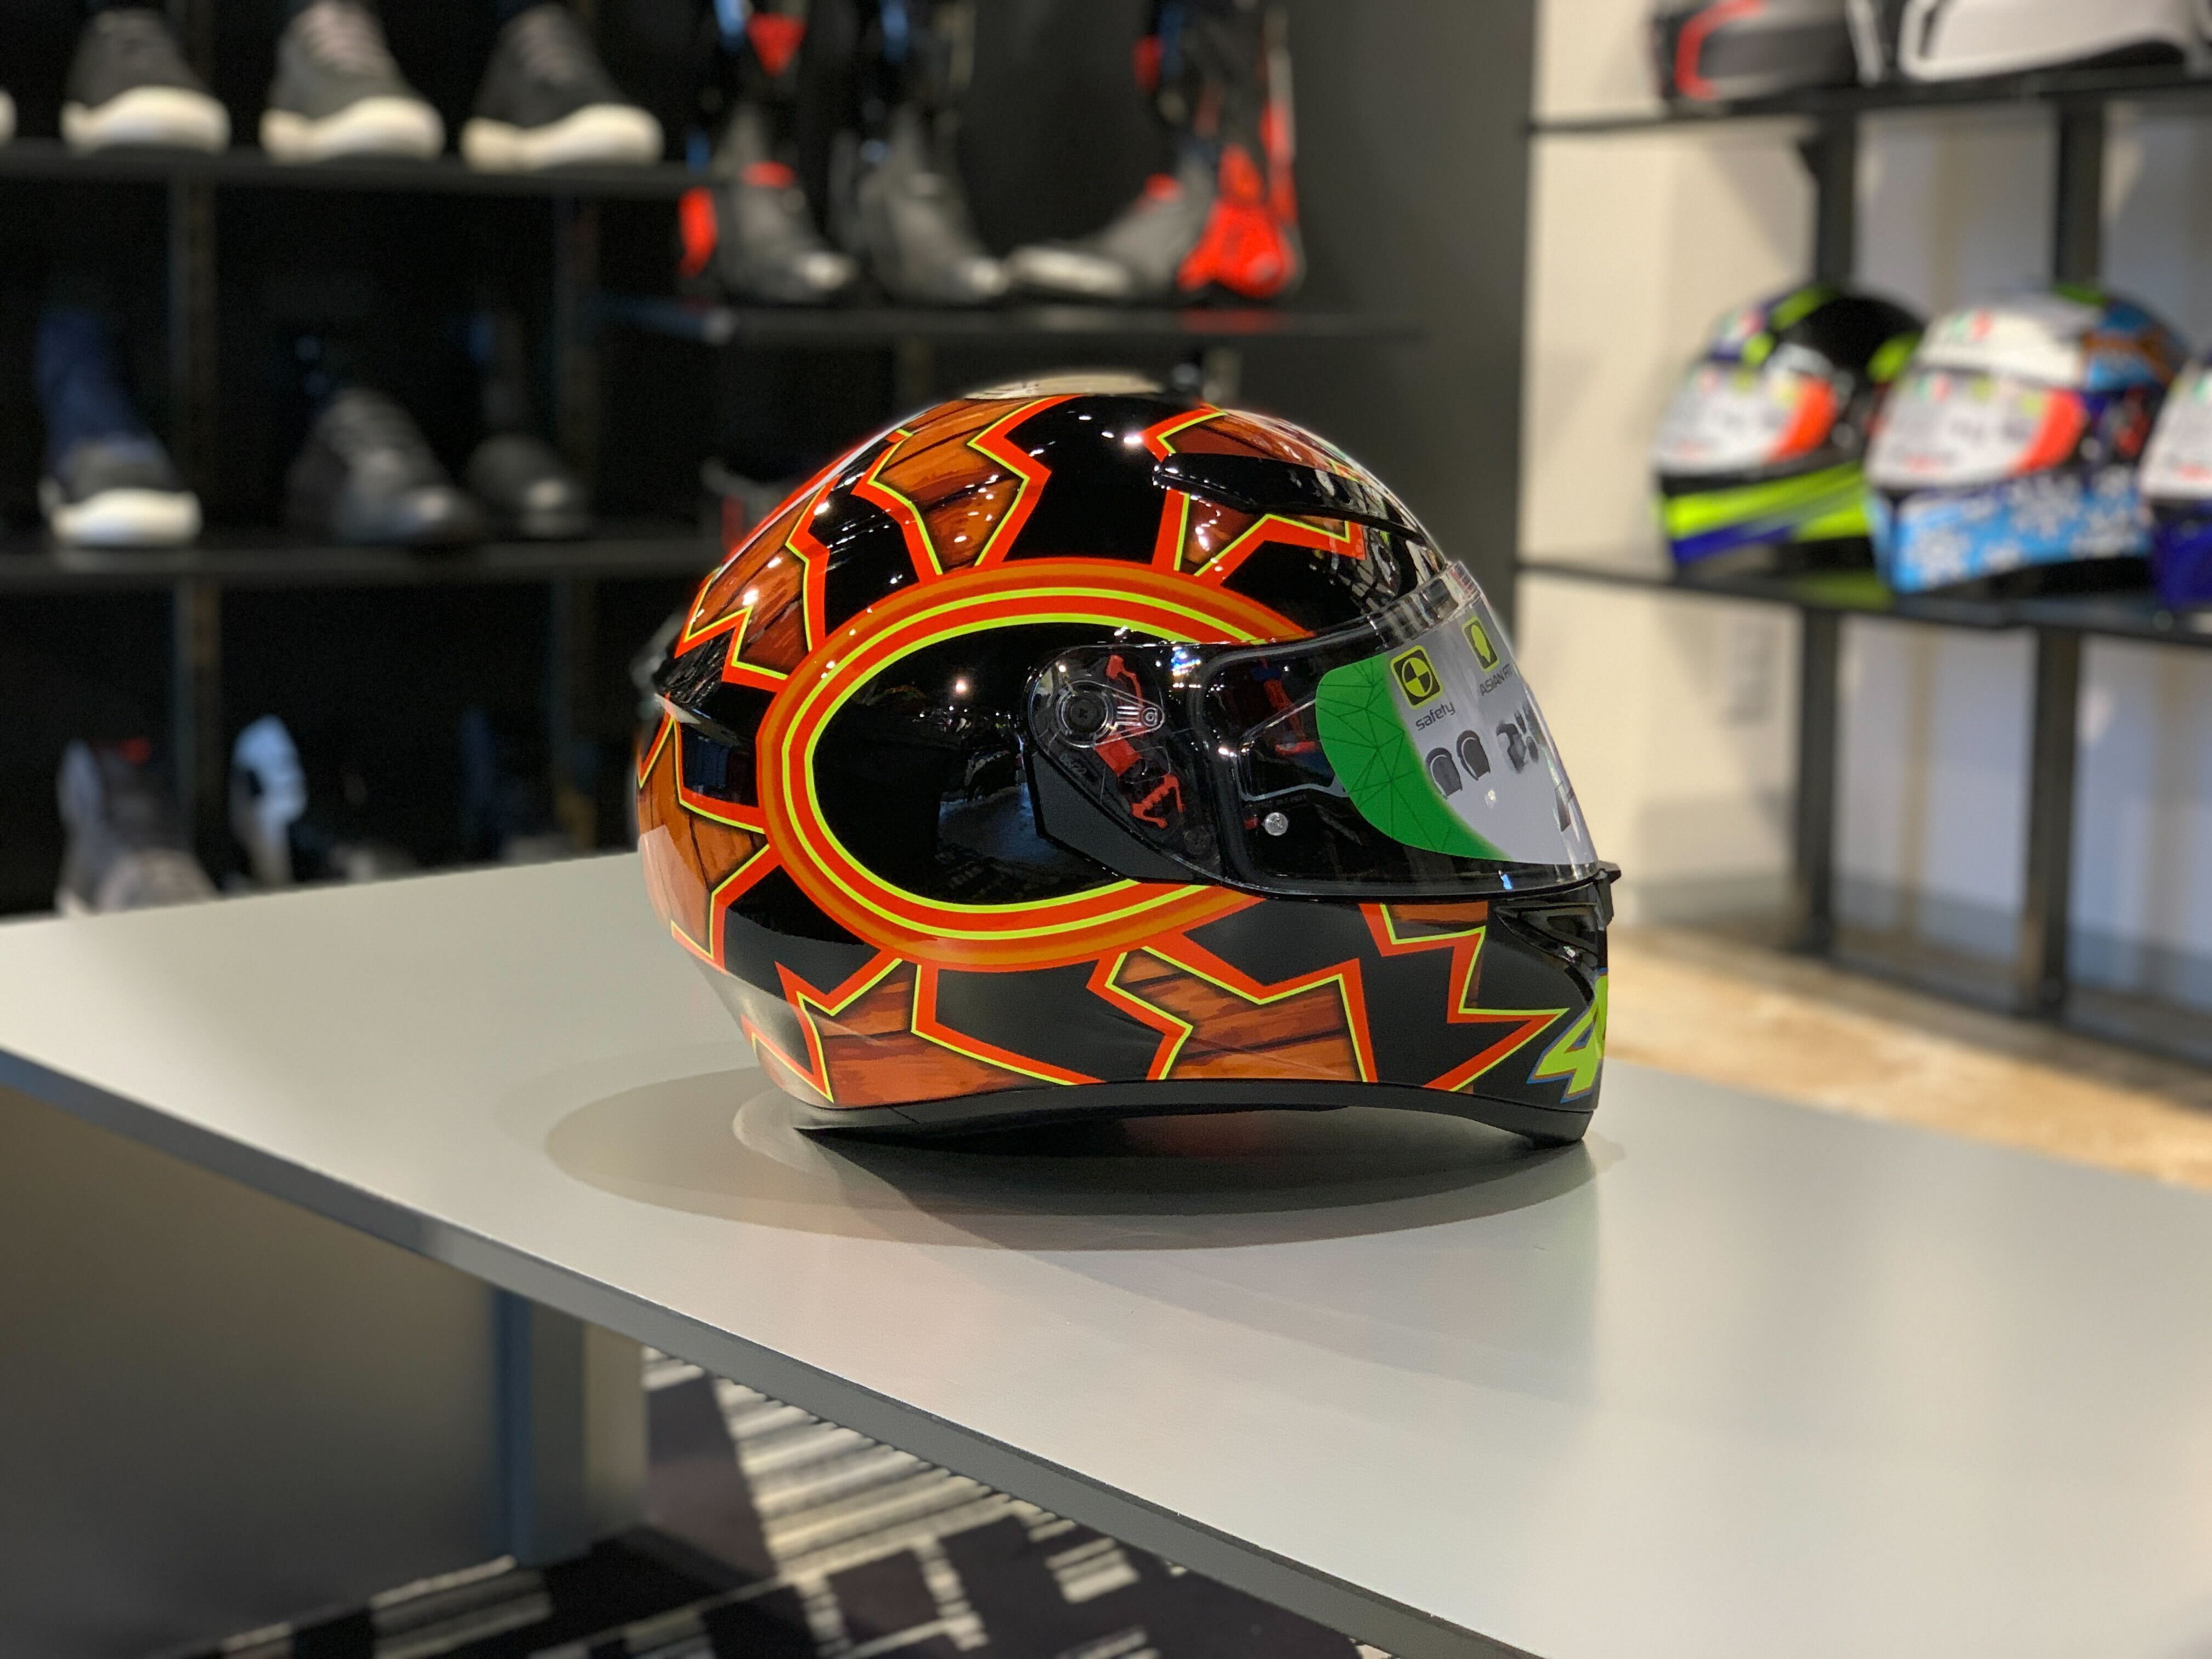 AGV K-3 ロッシ ムジェロハンズ ヘルメット 値段交渉可能 www